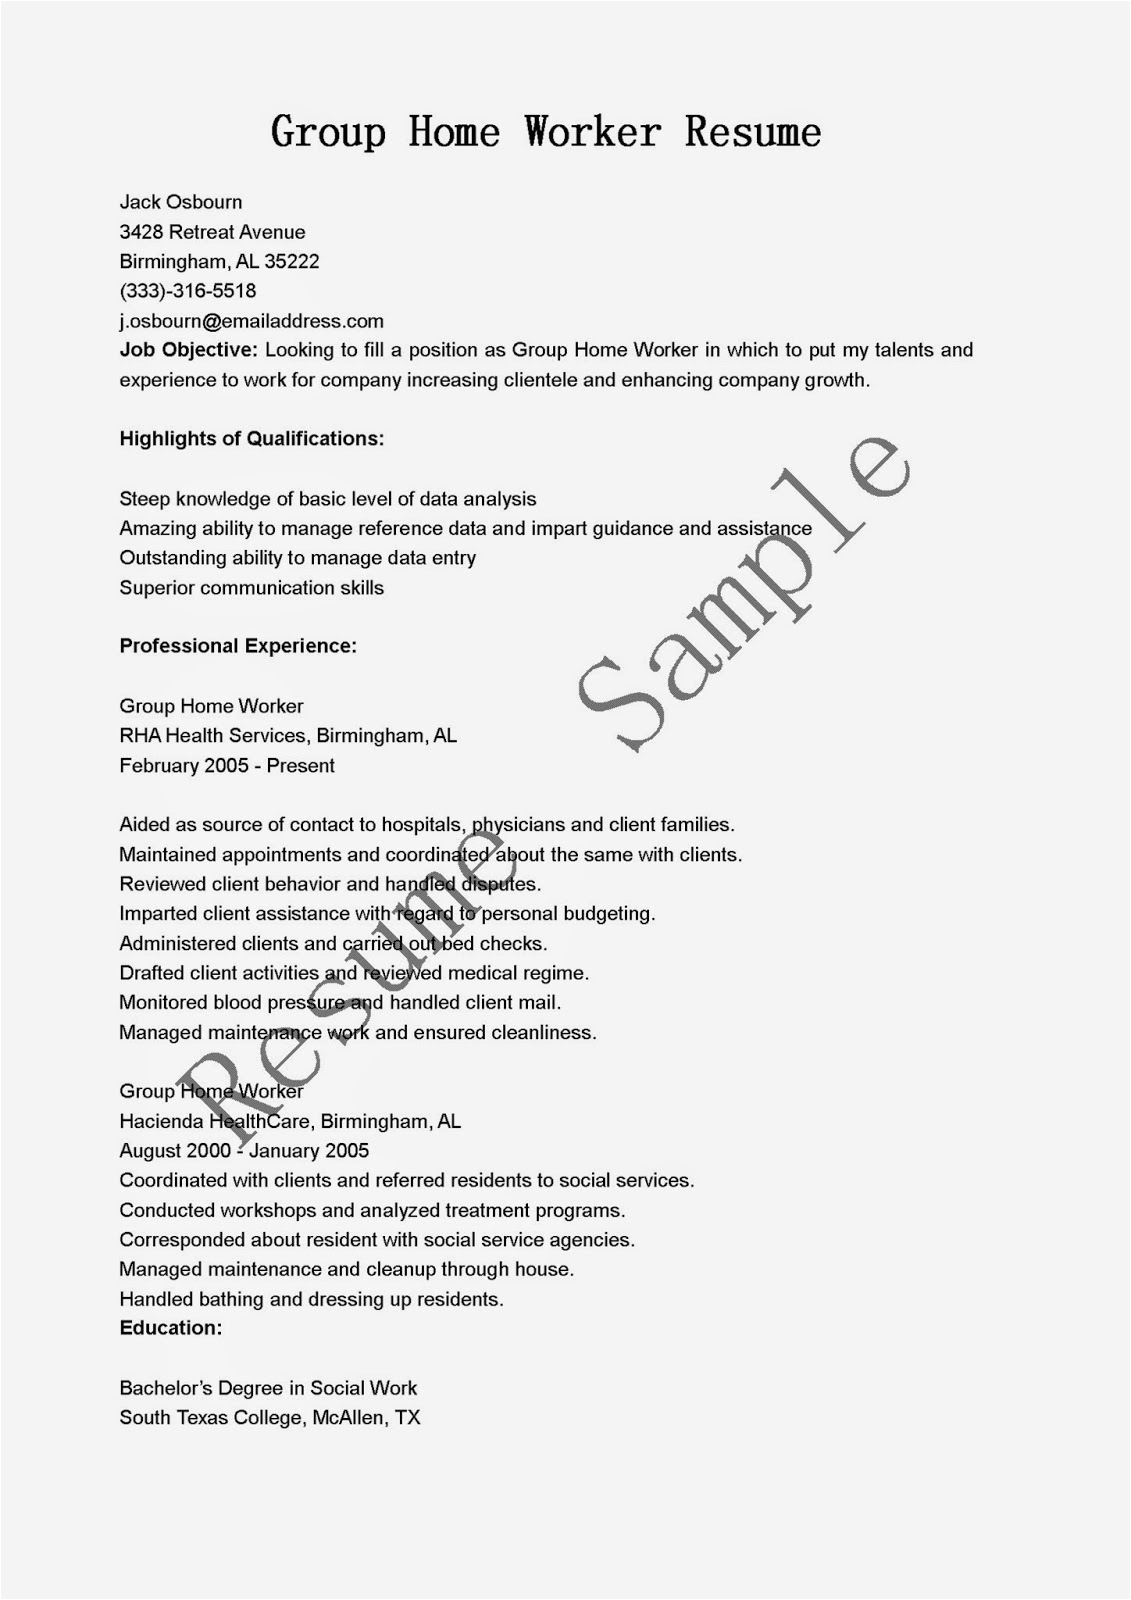 Sample Resume for Group Home Worker Resume Samples Group Home Worker Resume Sample